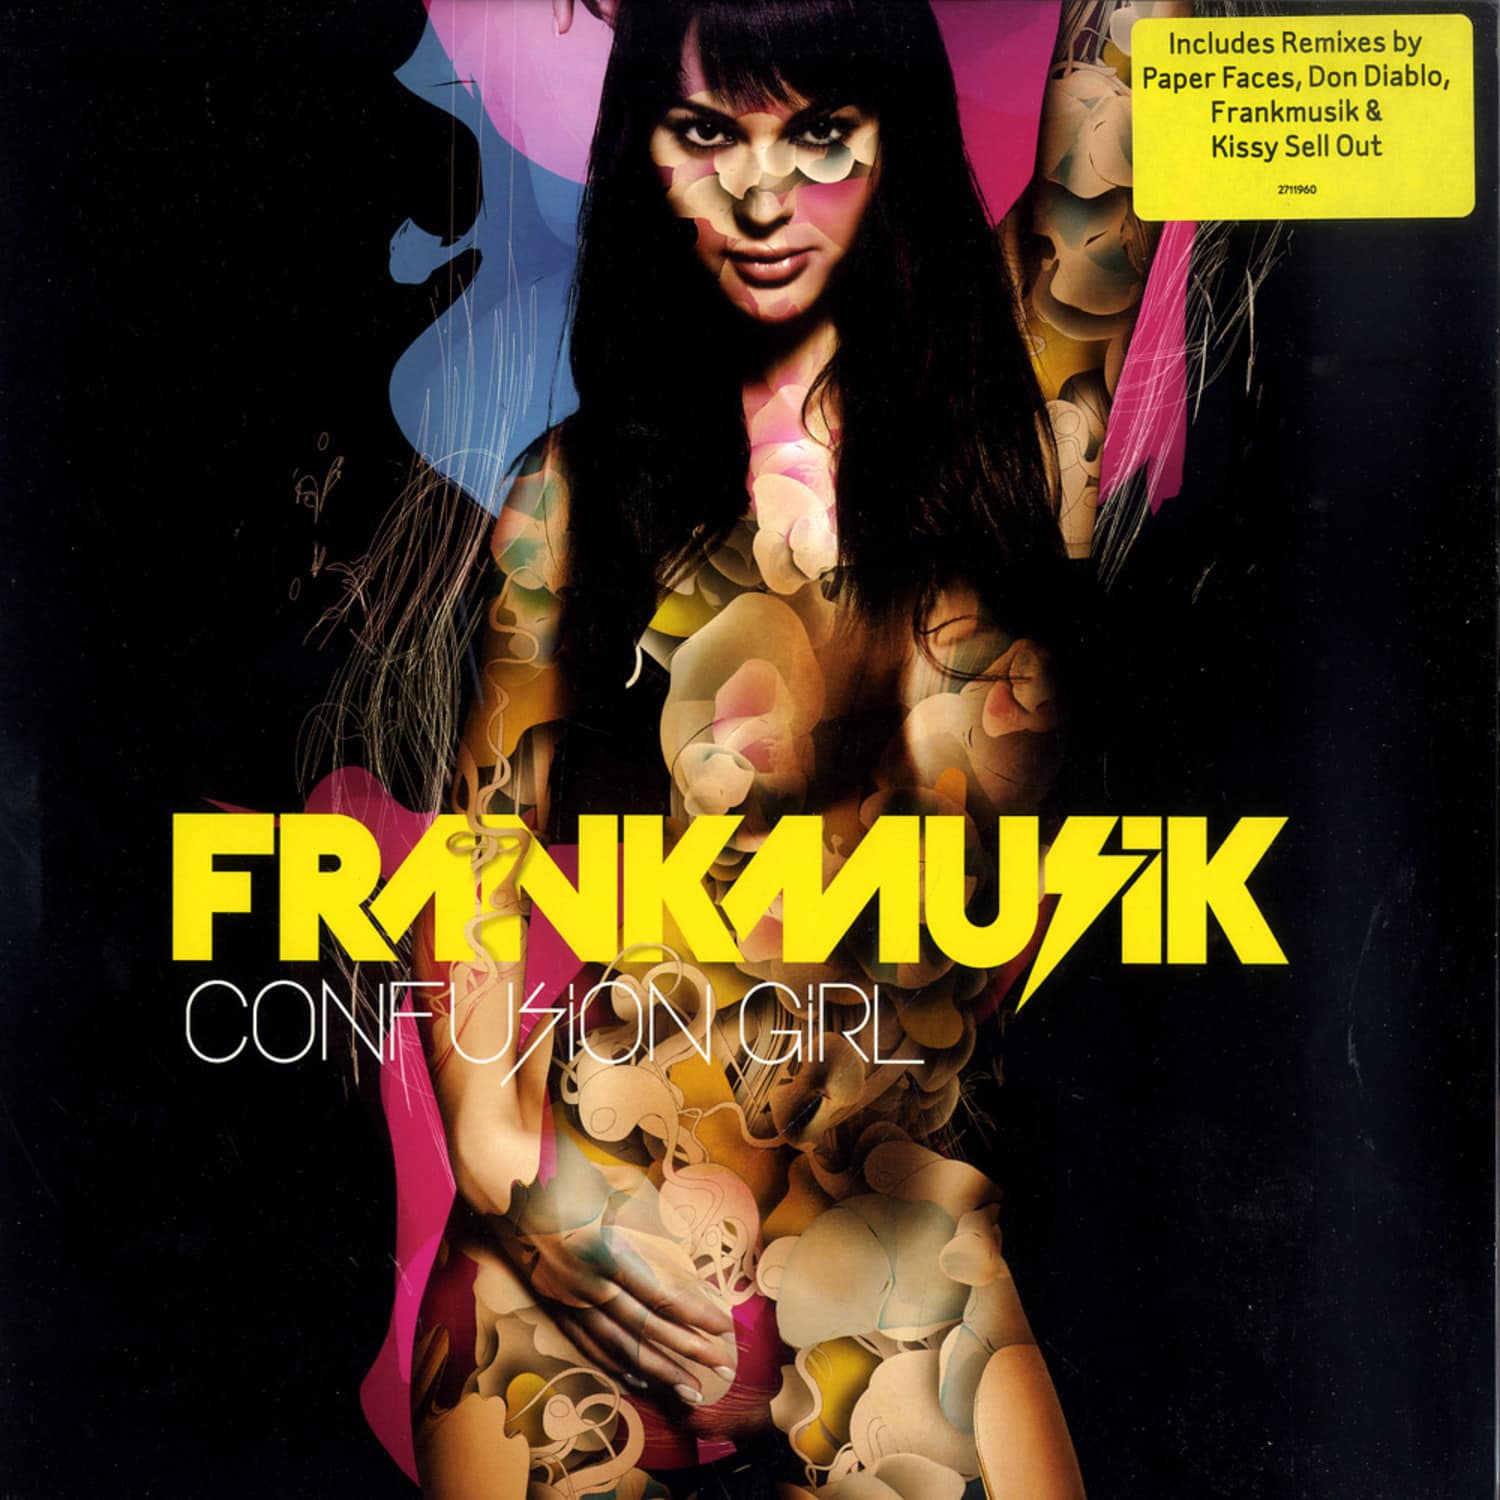 Frankmusik - CONFUSION GIRL